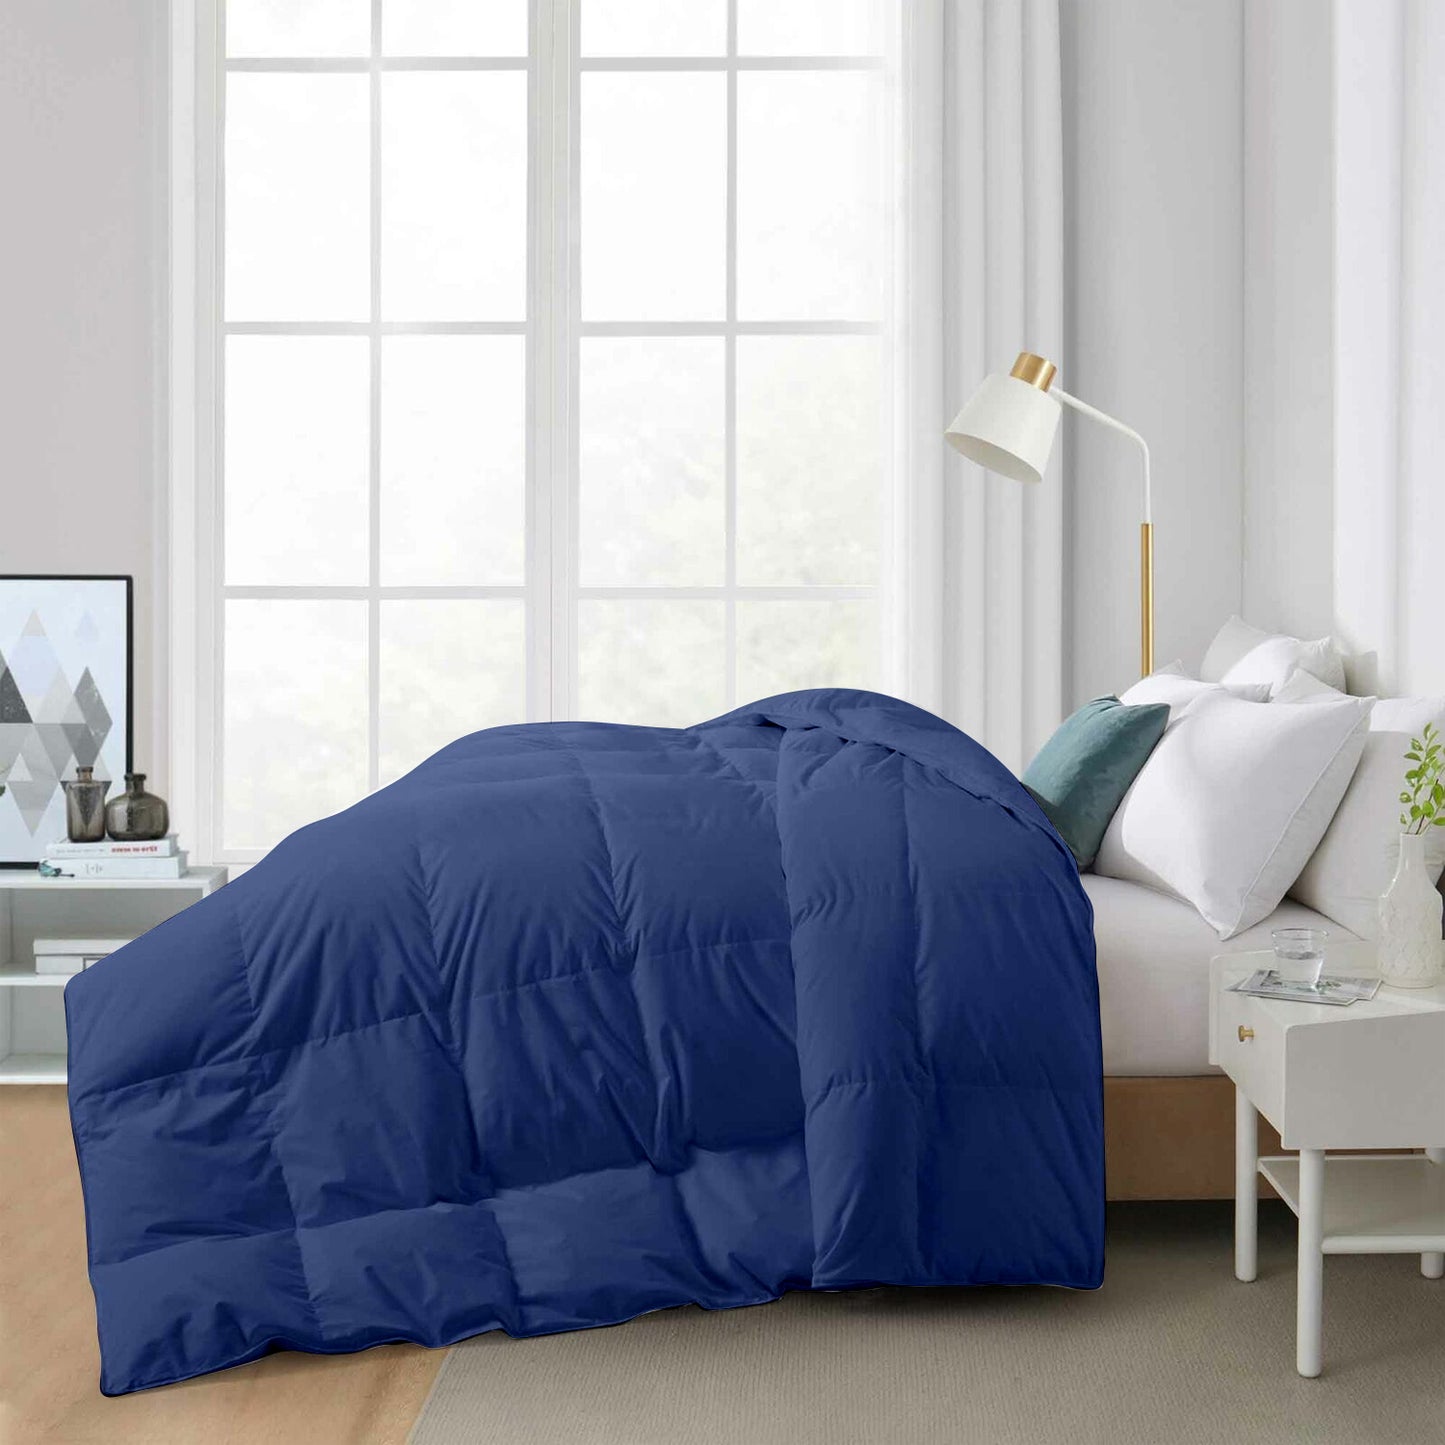 Razzai Down Alternative Soft Quilted 300 GSM All Weather Comforter|Medium Blue|Microfibre|lightweight